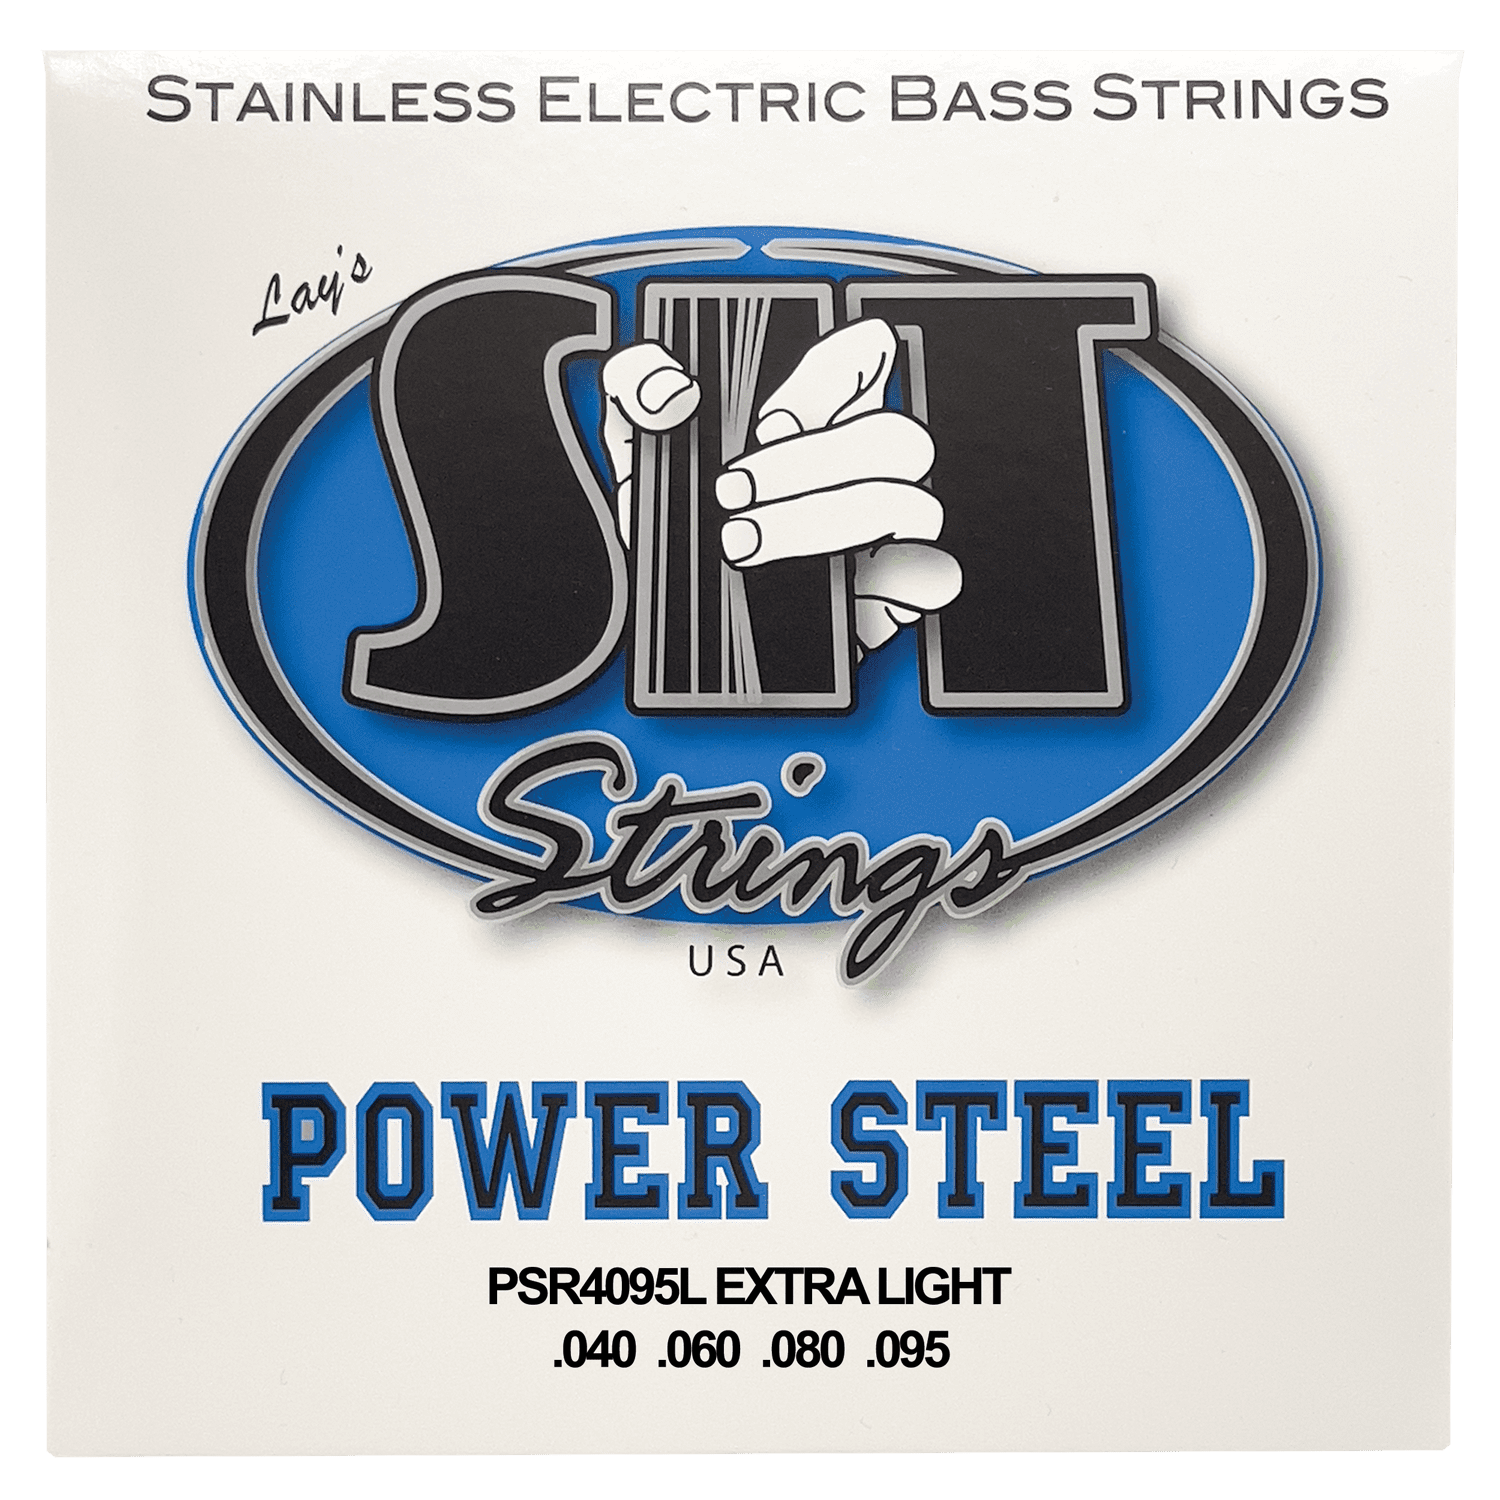 SIT POWER STEEL STAINLESS STEEL BASS - HIENDGUITAR PSR4095L EXTRA LIGHT PSR4095L EXTRA LIGHT SIT Bass Strings